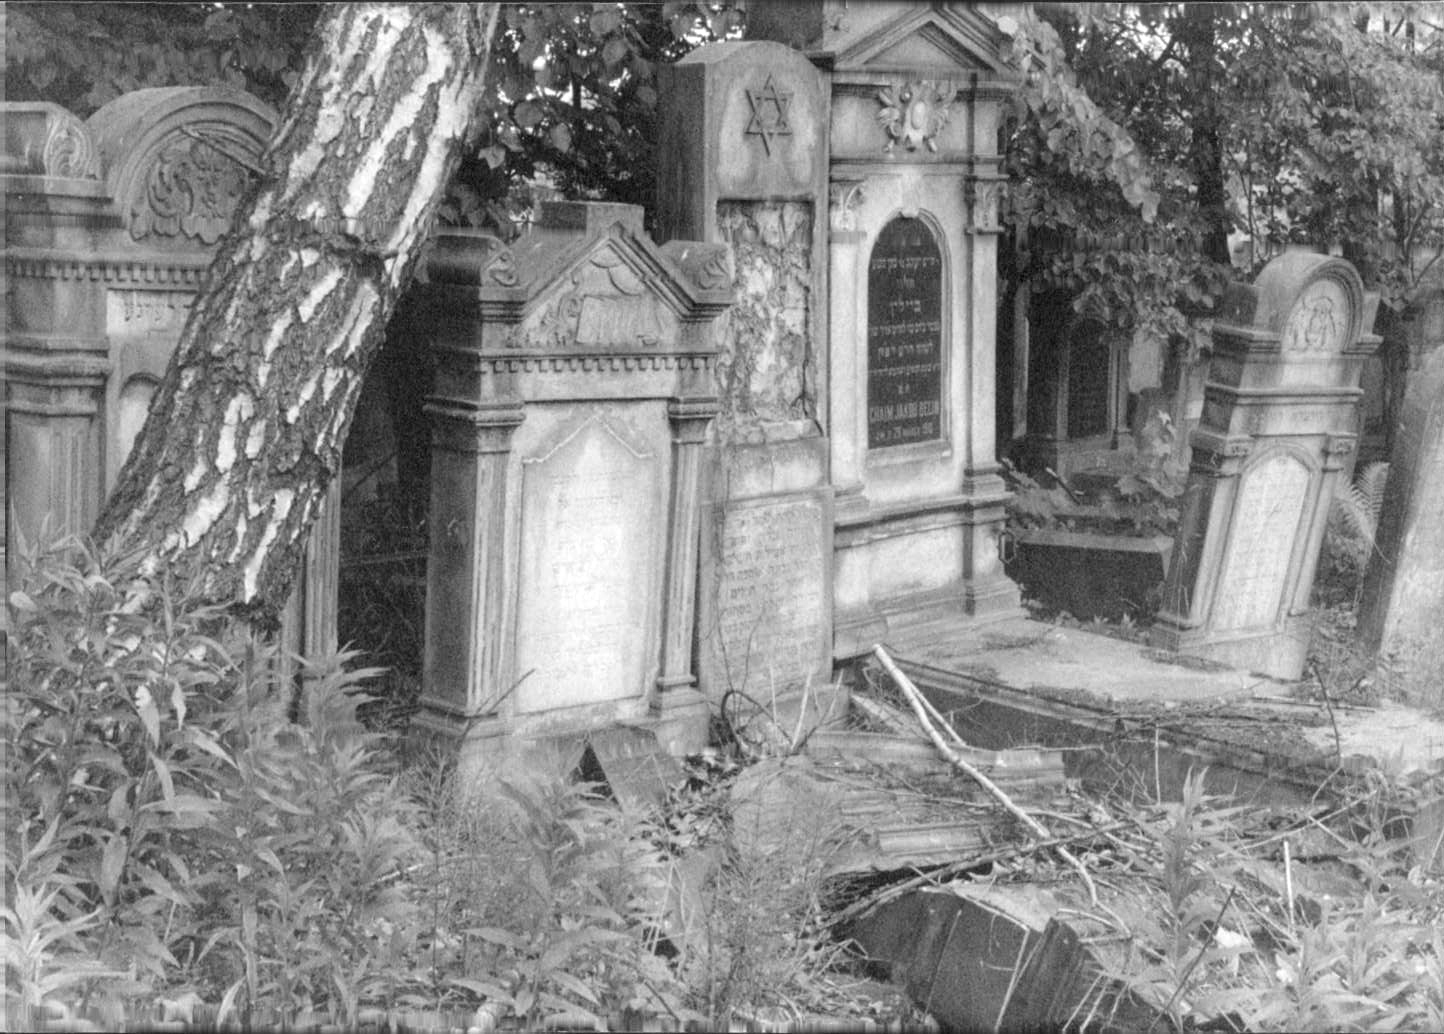 Jewish Cemetery, Łódź, 1990